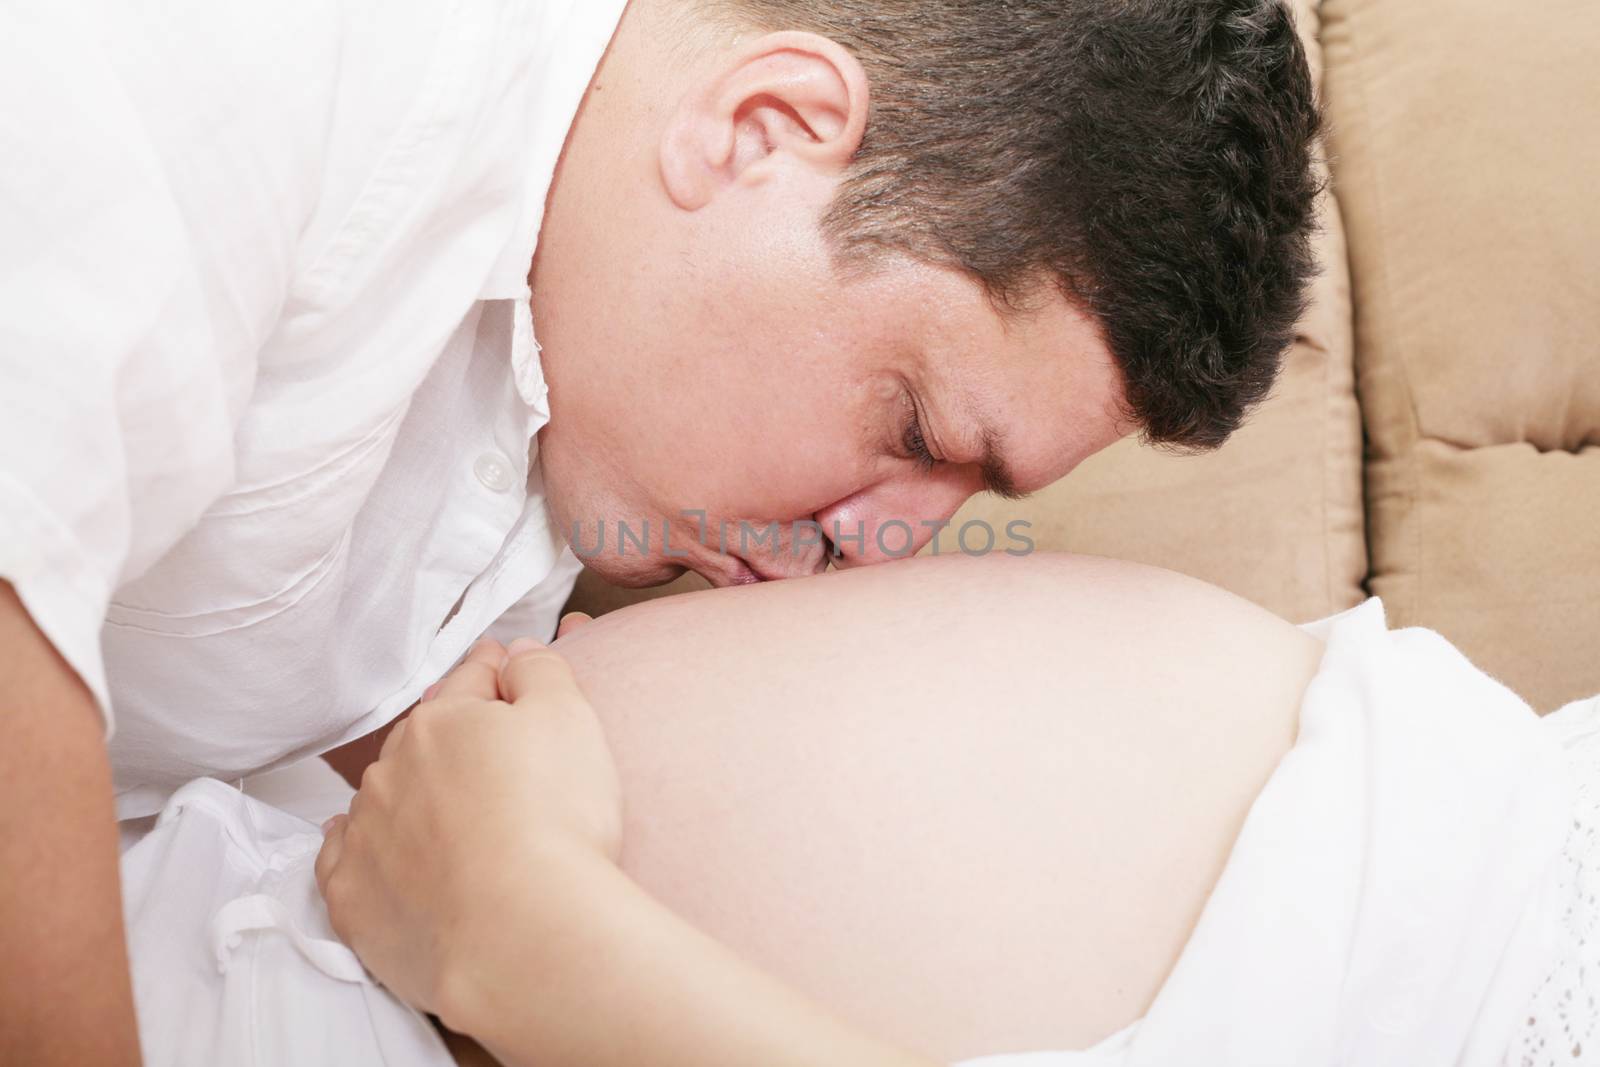 man kiss a stomach of the pregnant woman by dacasdo